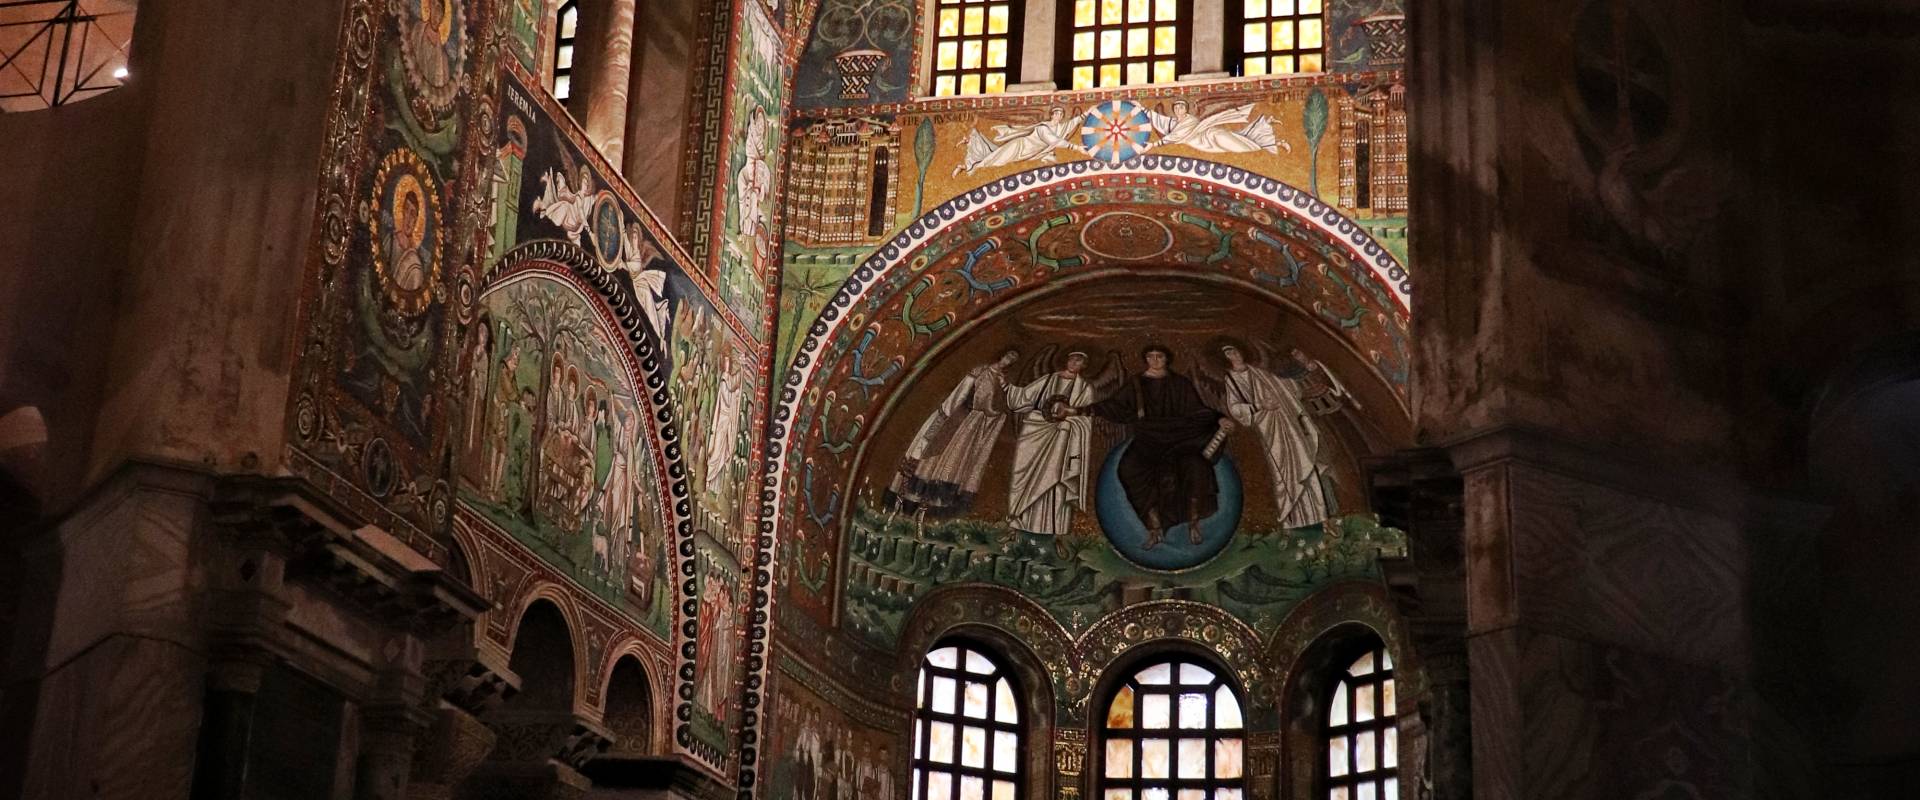 Basilica di San Vitale, Ravenna (abside) foto di Stefano Casano